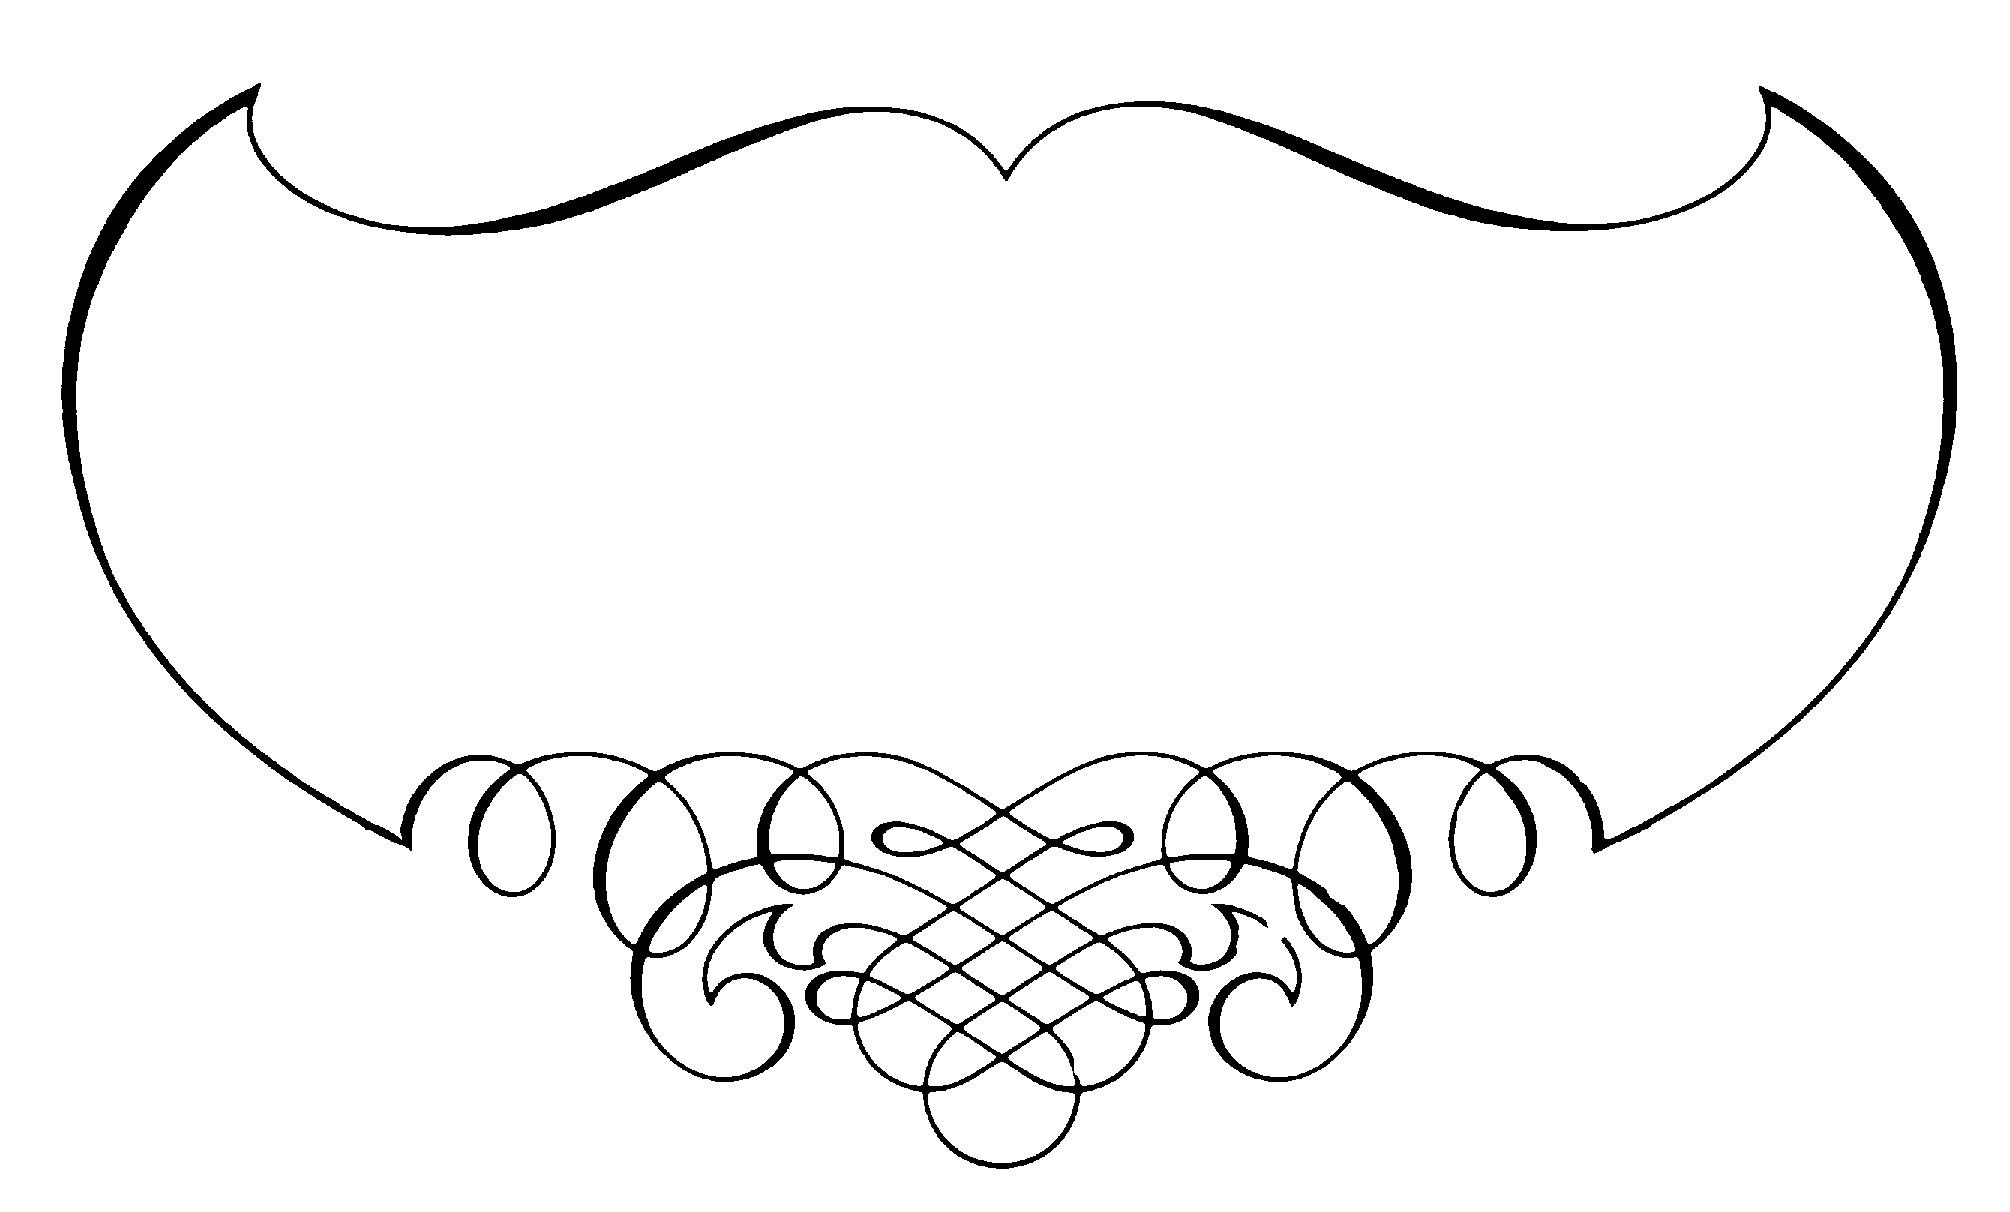 Calligraphy Border Designs